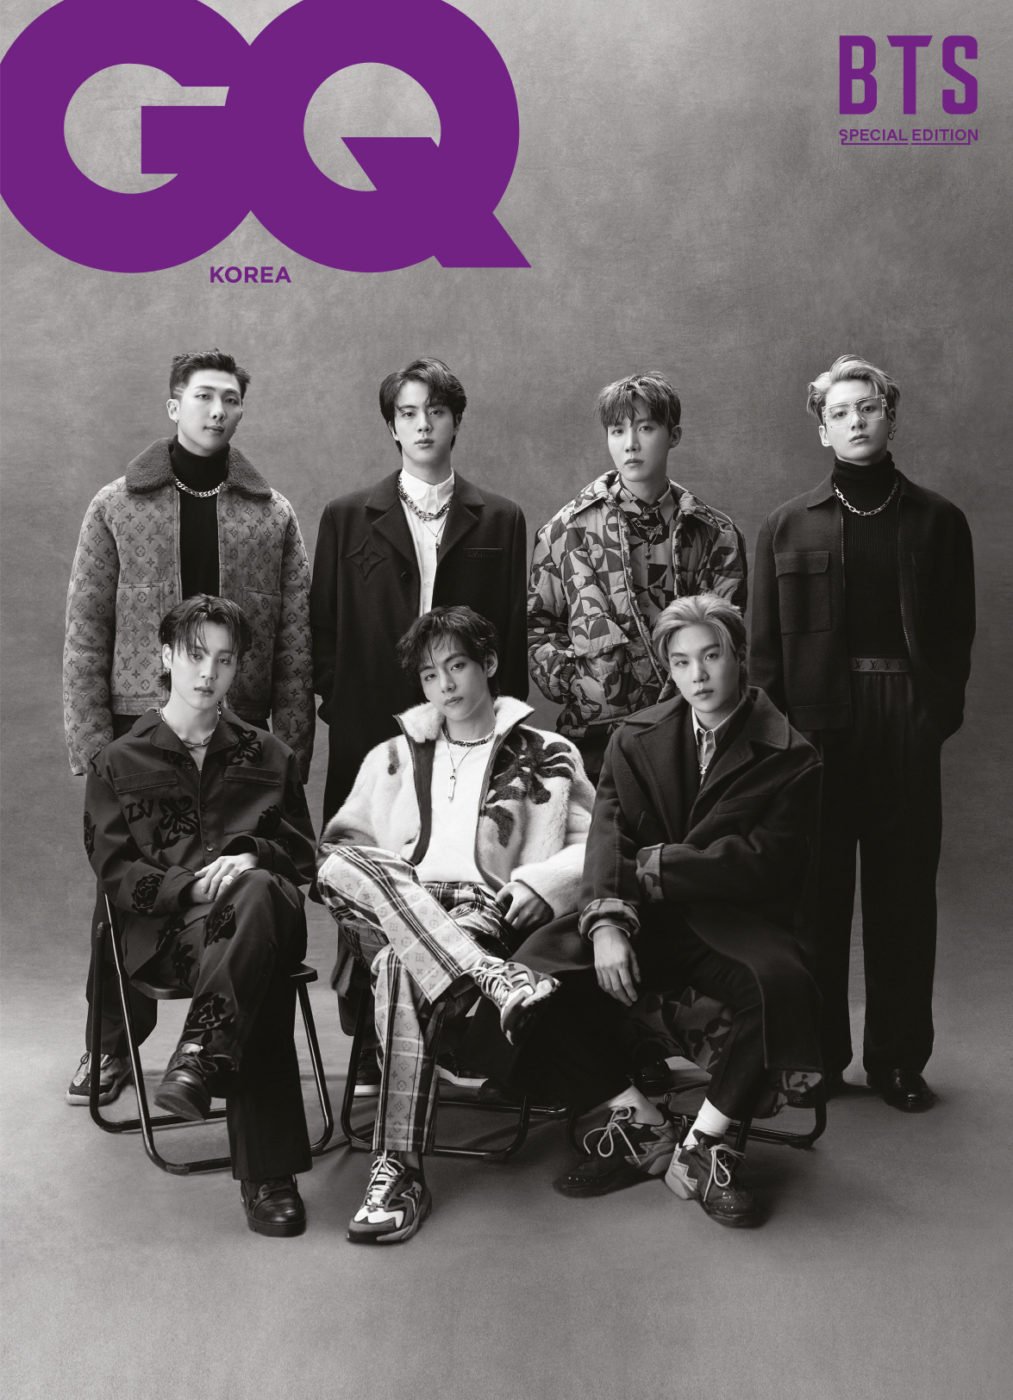 BTS x GQ KOREA  Gq, Vogue korea, Bangtan